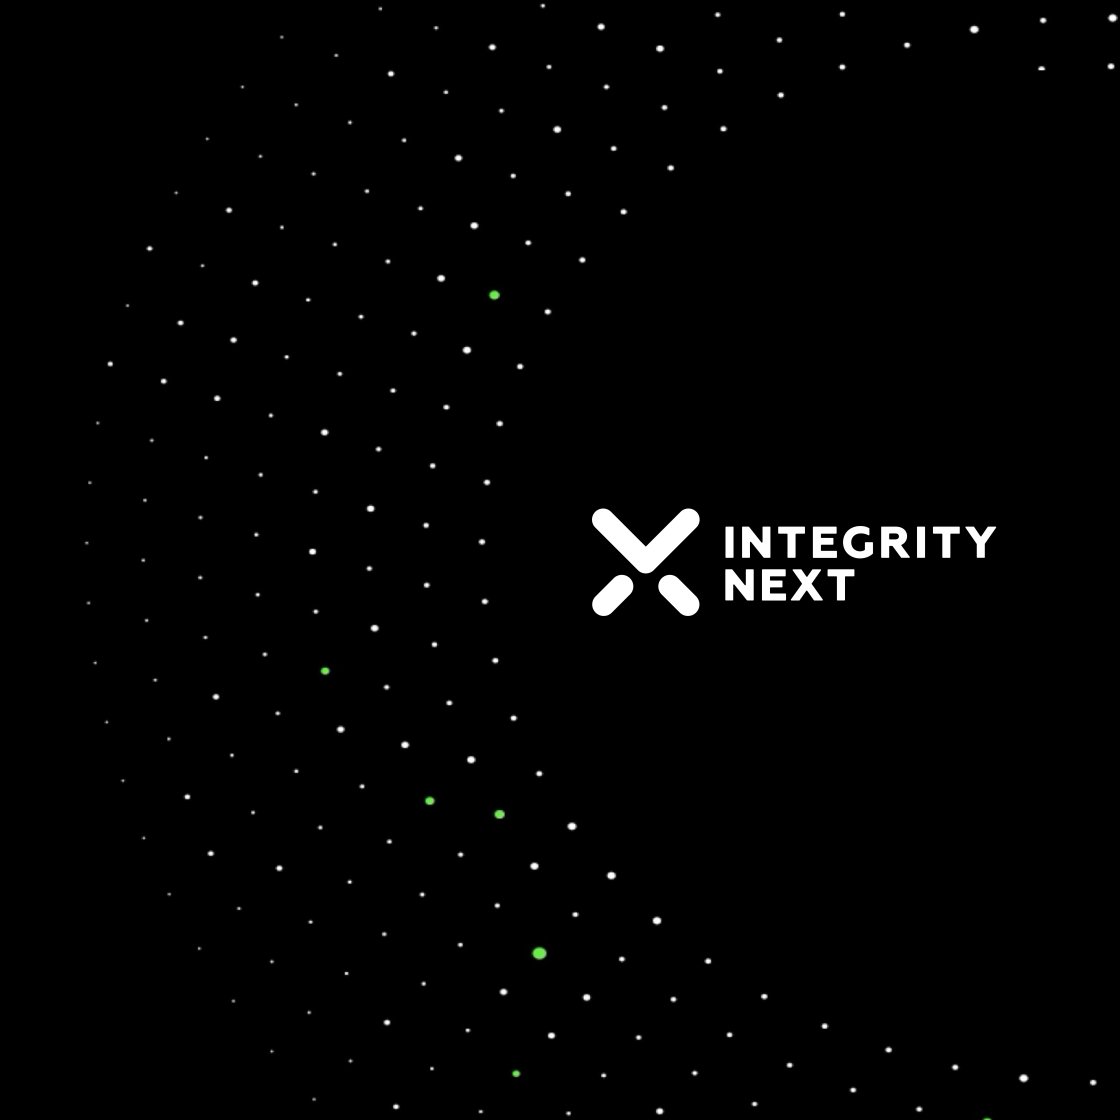 IntegrityNext